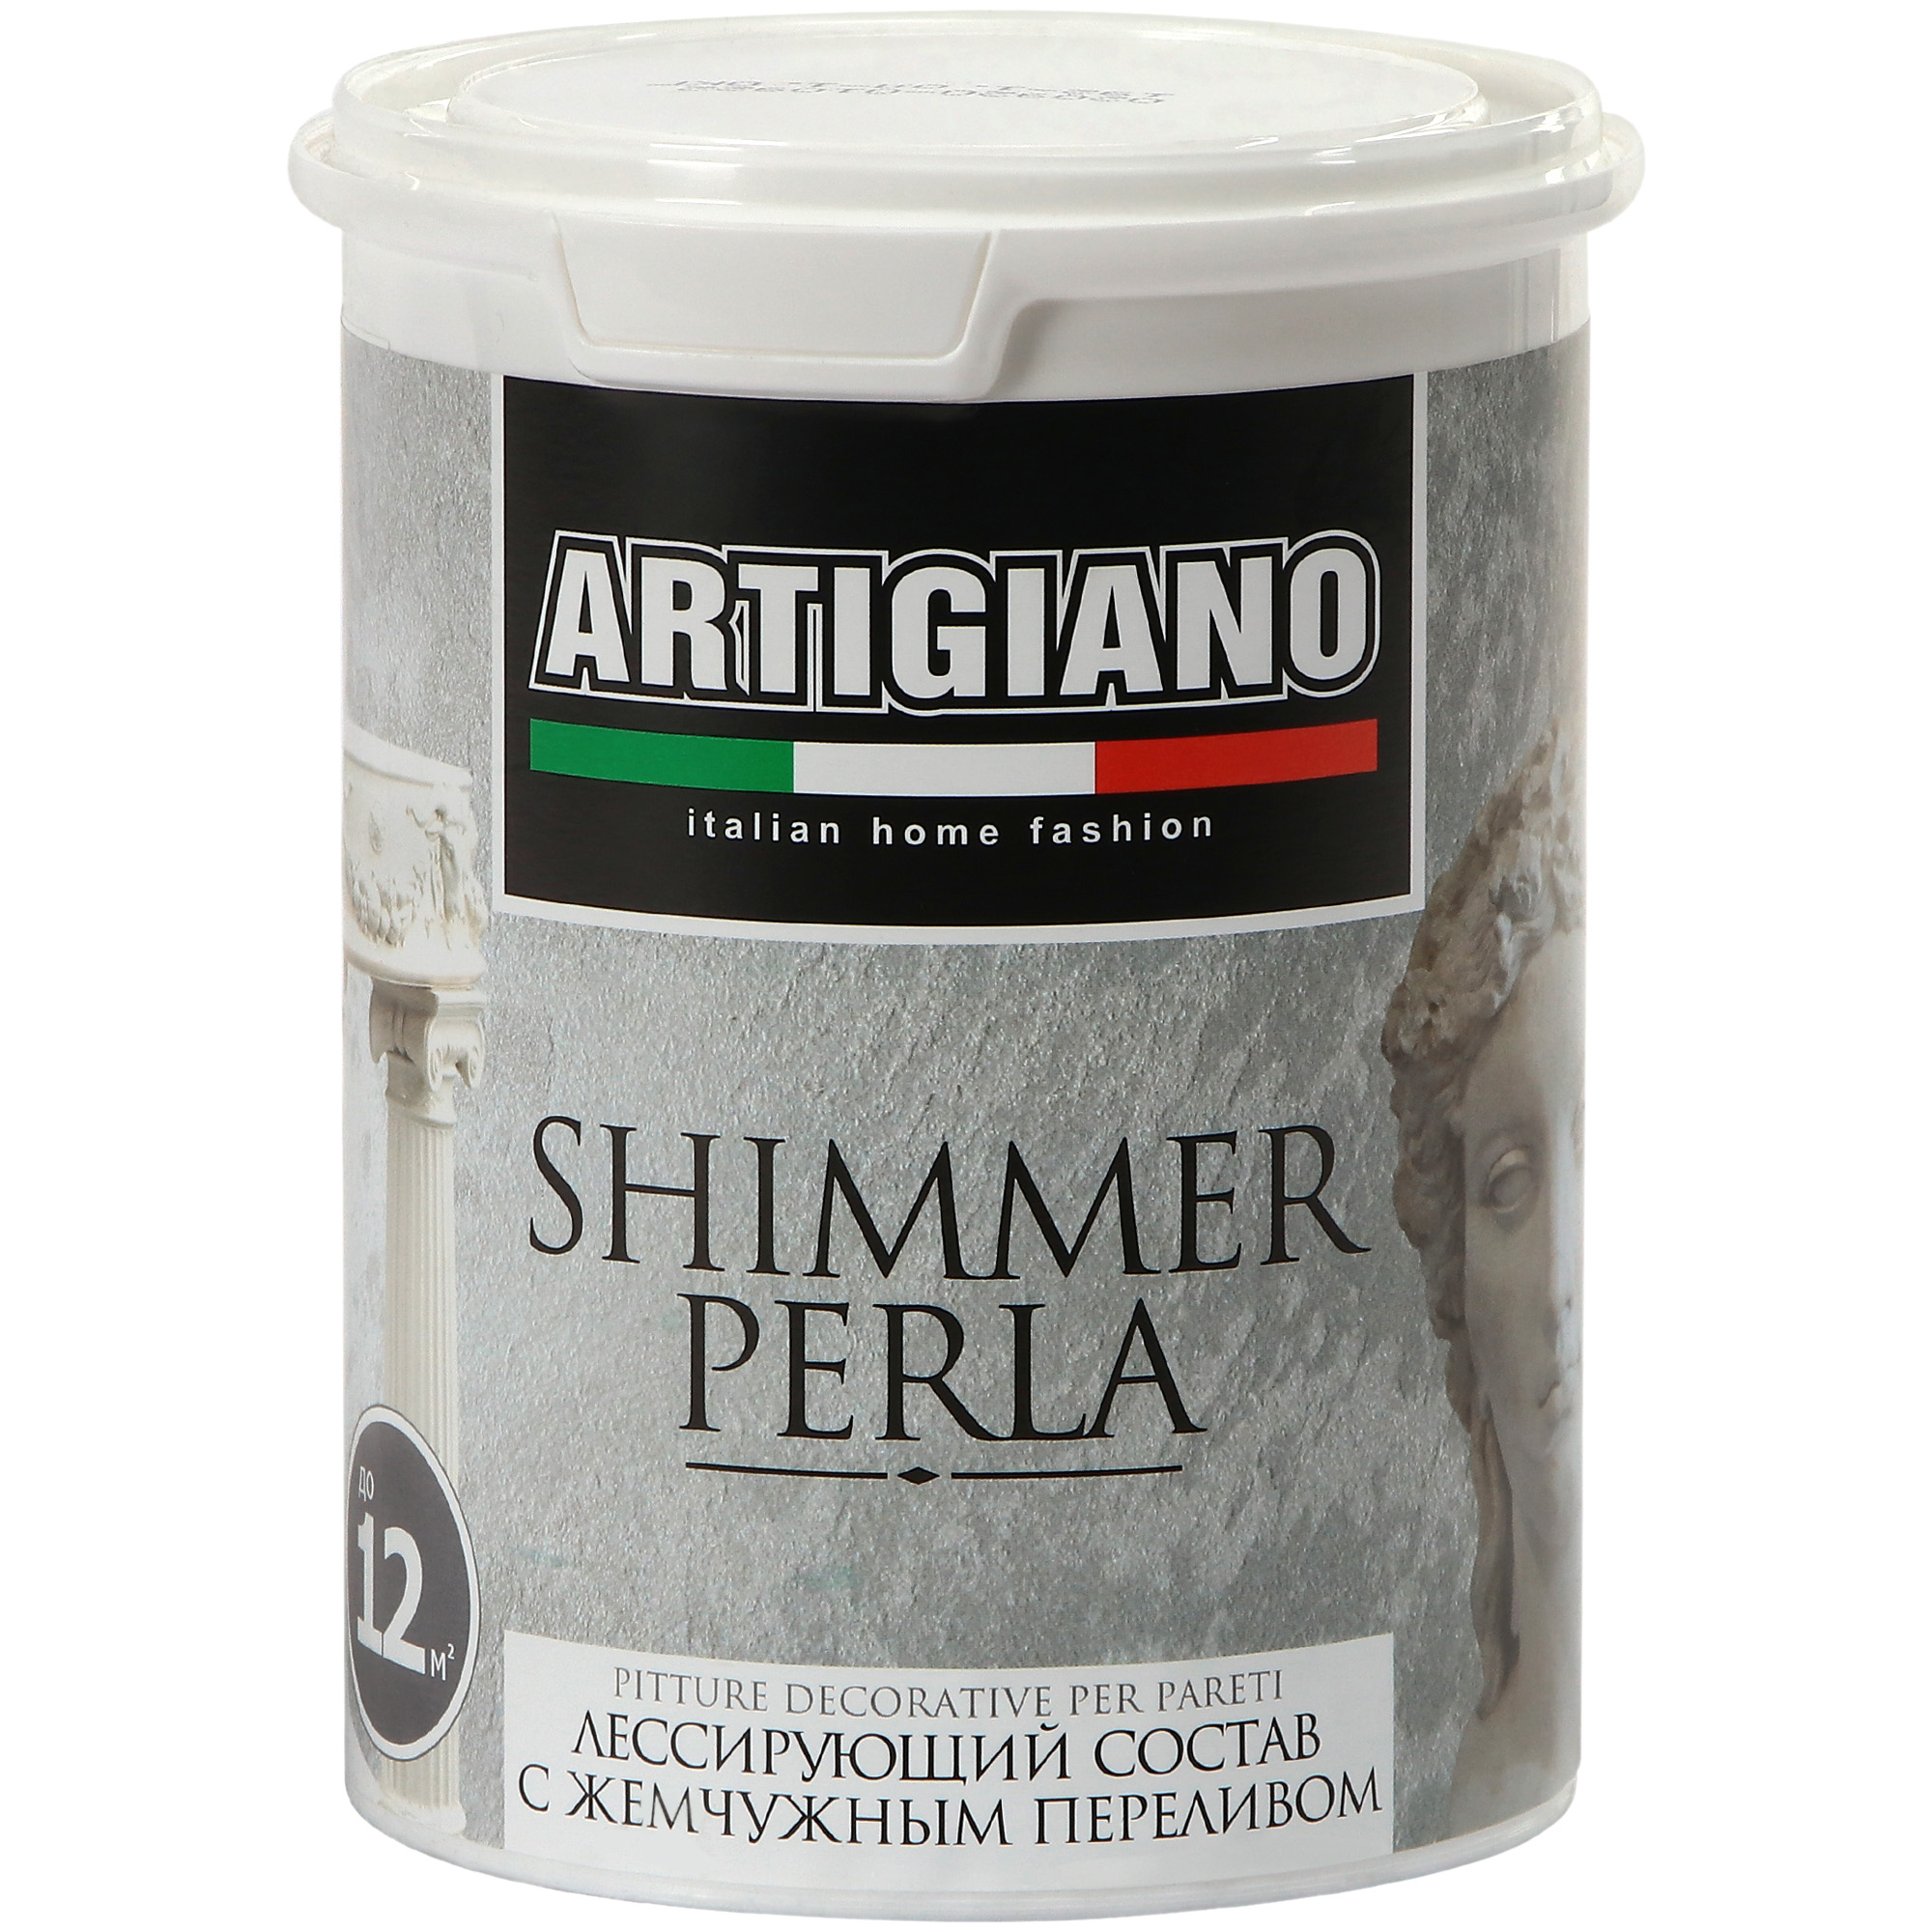 Лак Artigiano Shimmer Perla лессирующий 1 л лак decorazza perla vernici argento 1 л dplv001 10